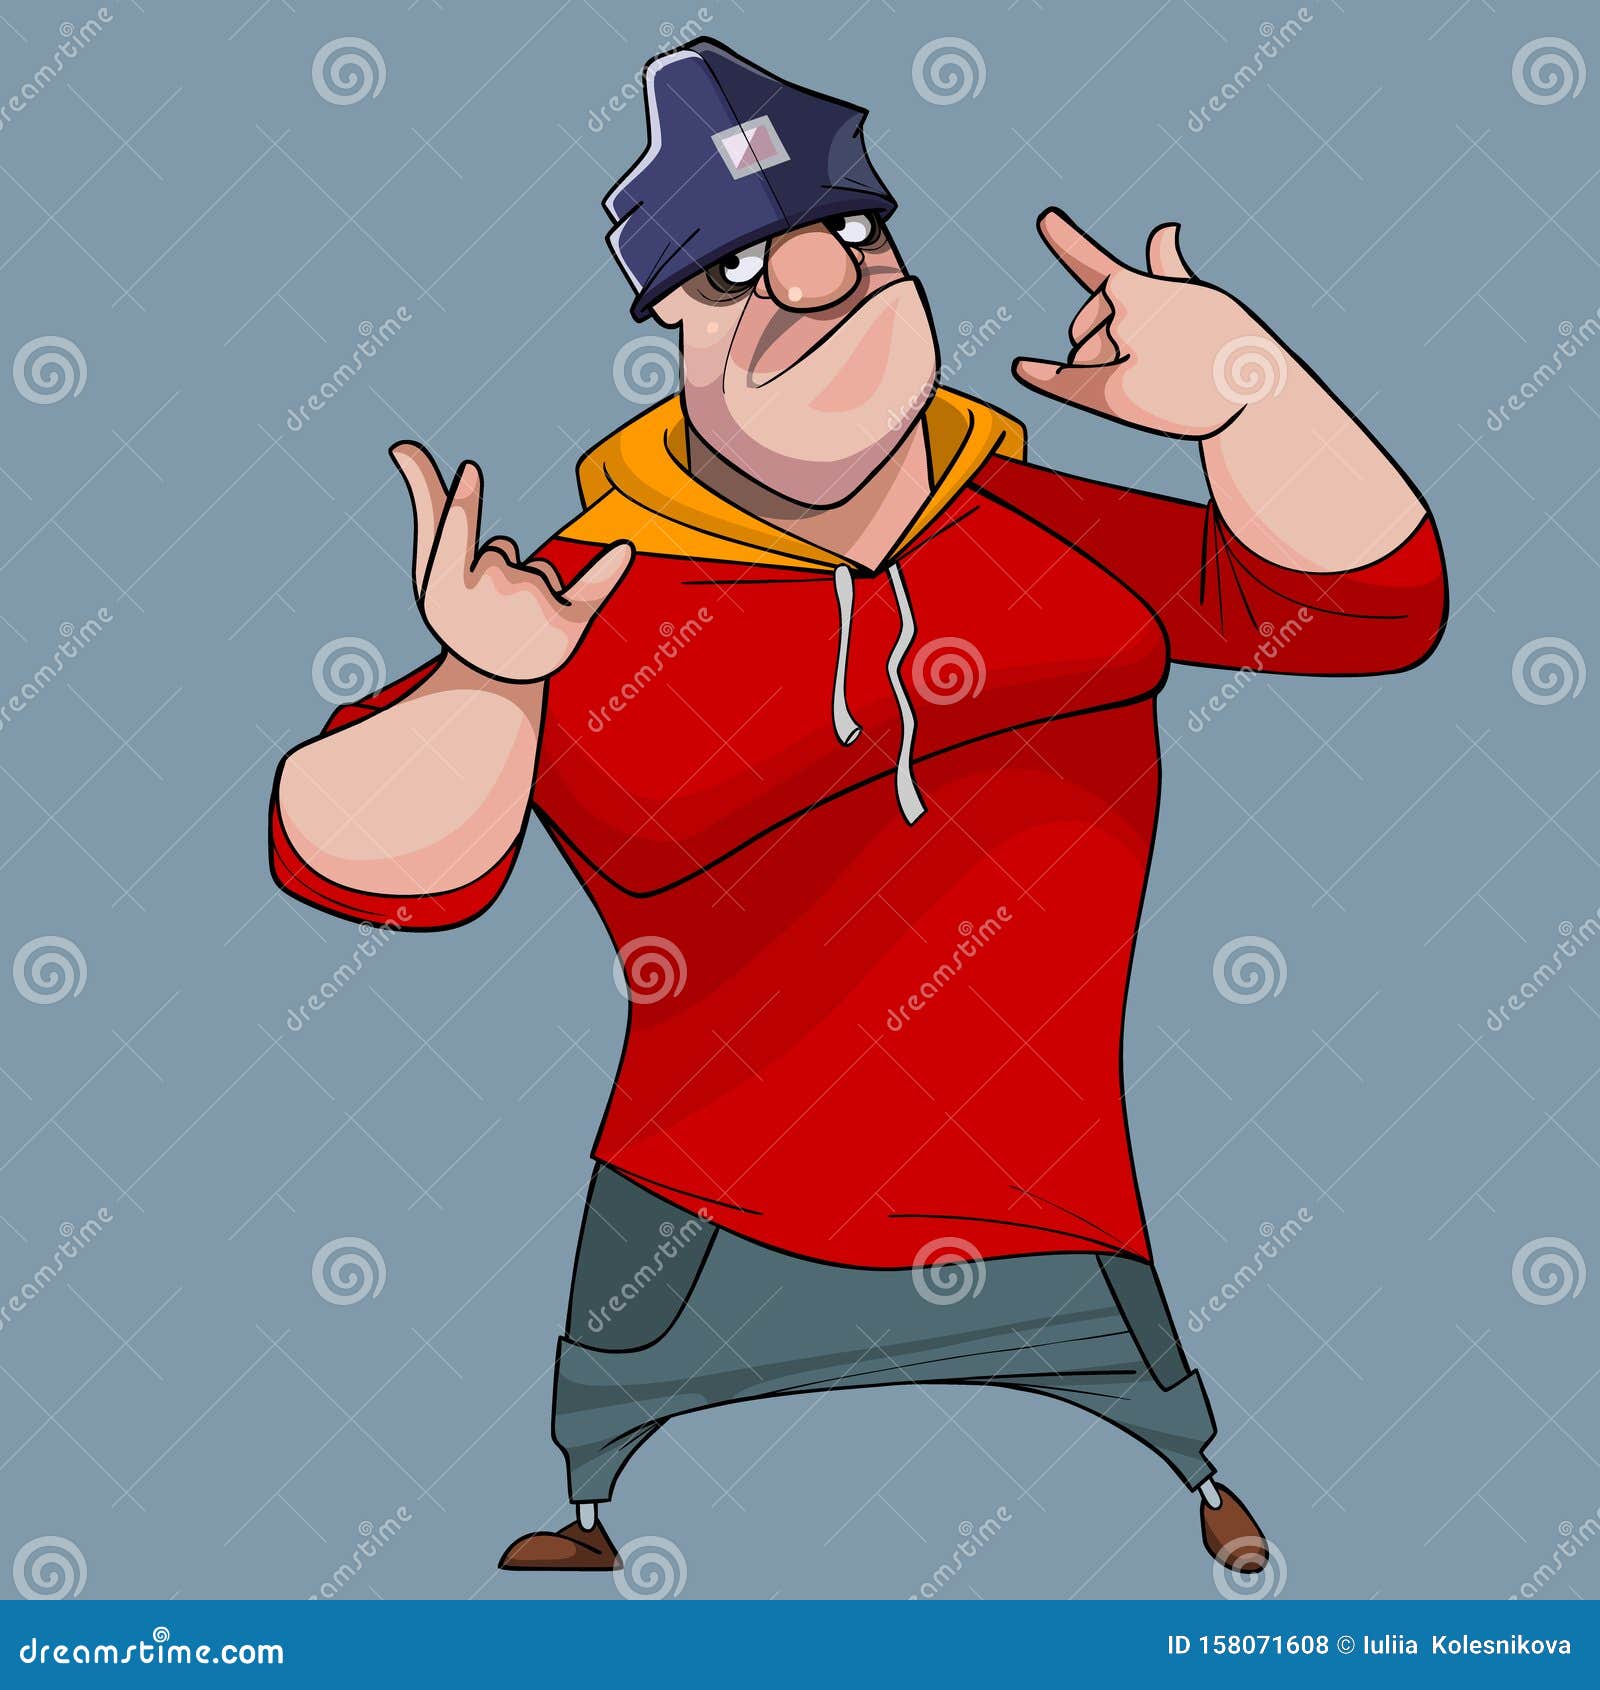 Funny Cartoon Big Guy Posing in Sportswear Stock Vector - Illustration of  attitude, humor: 158071608